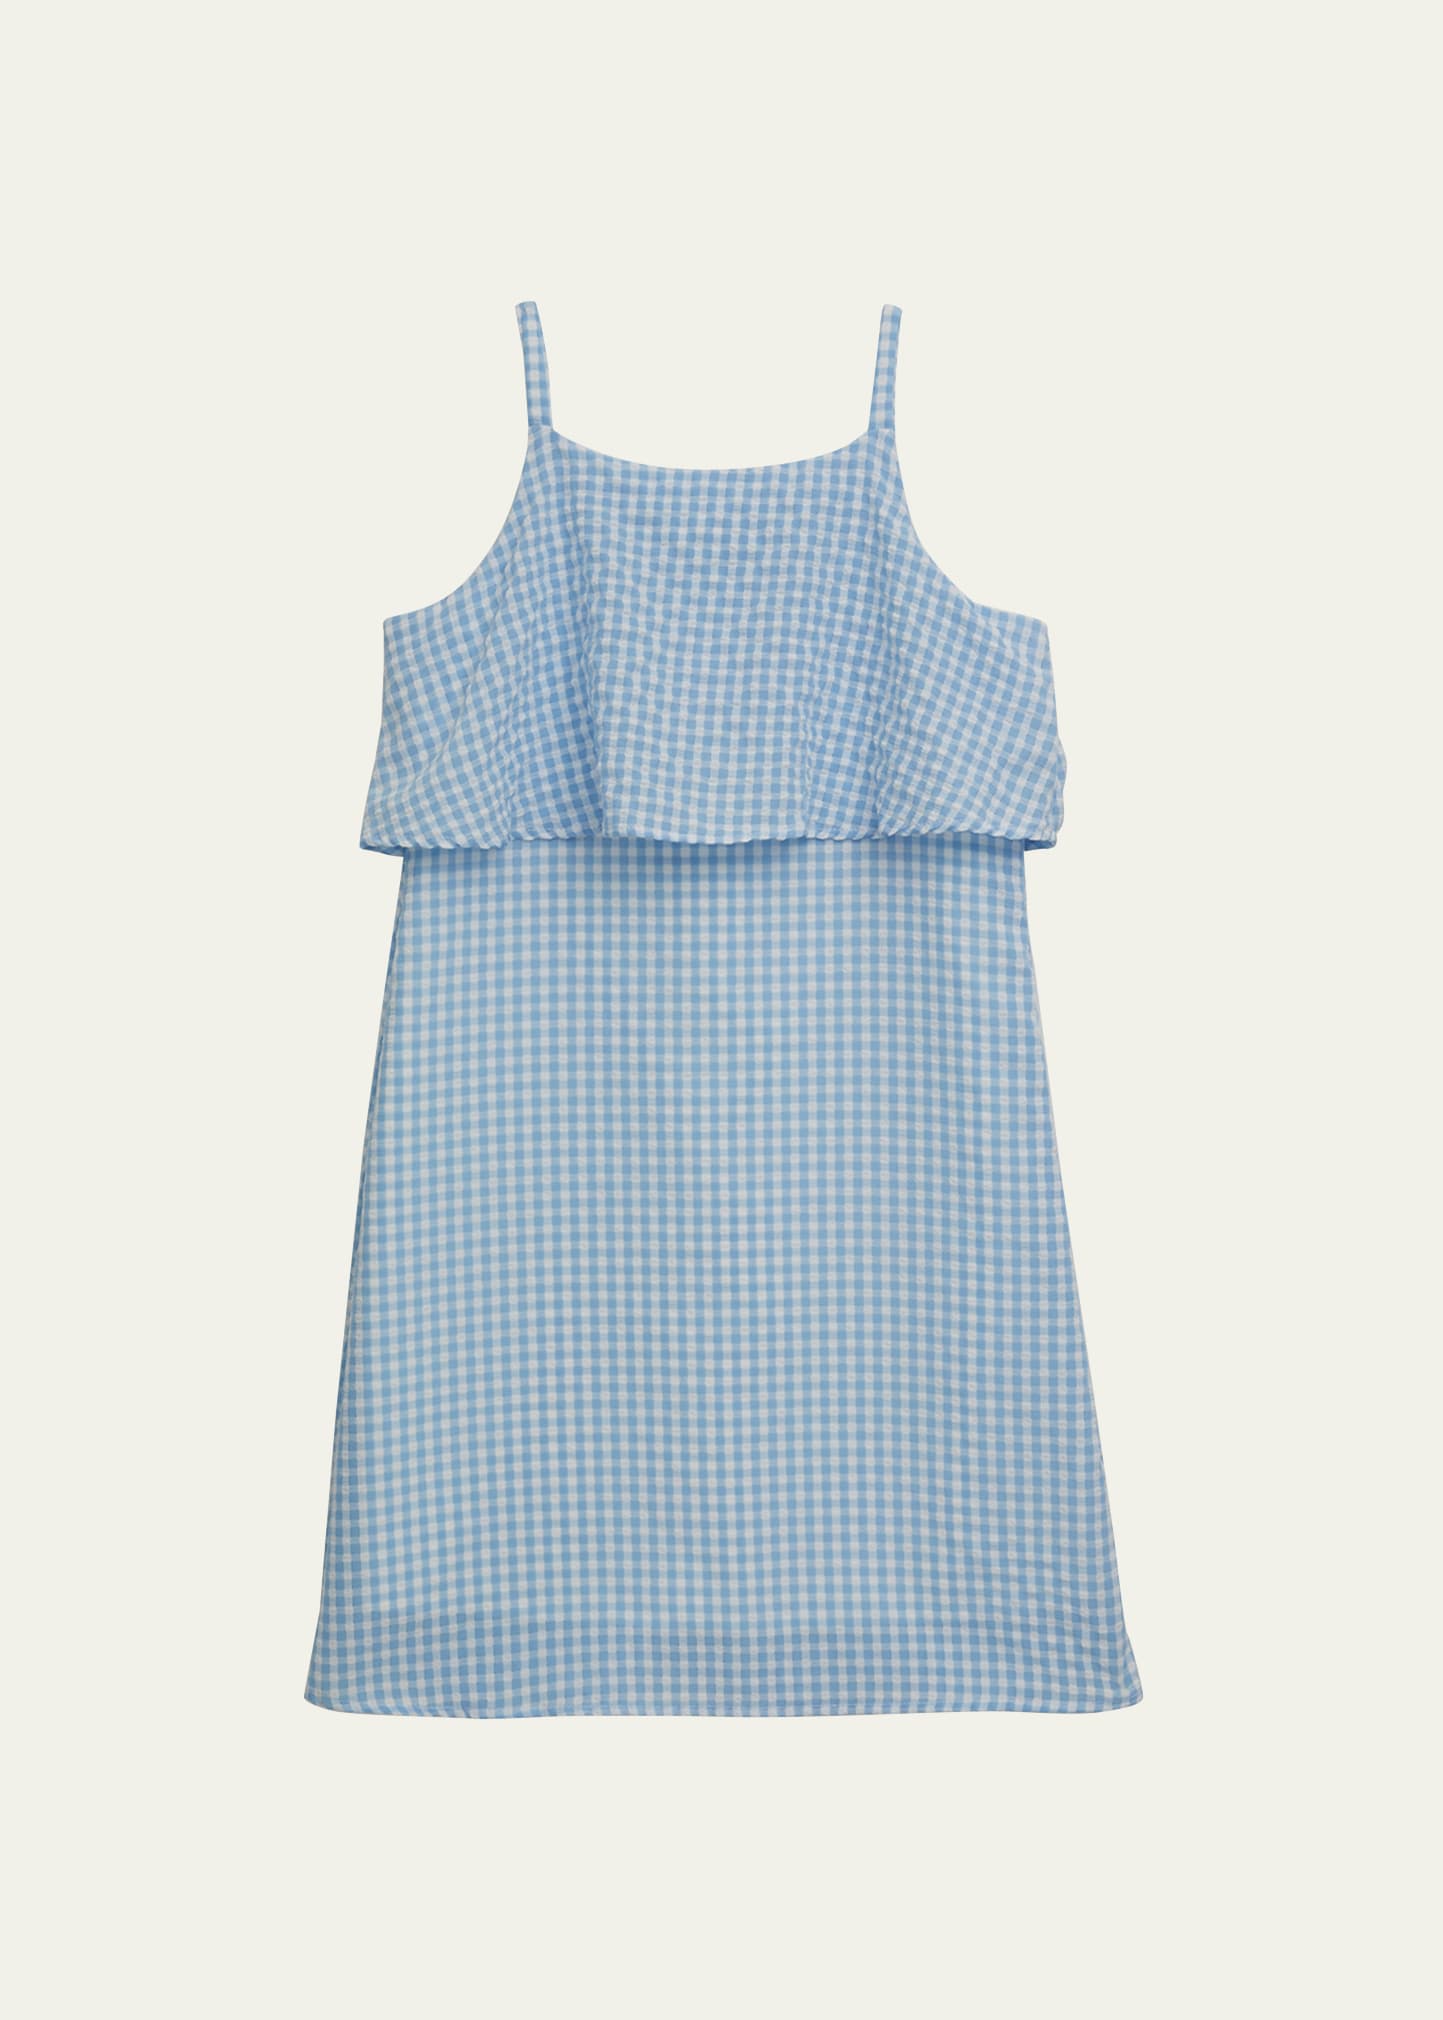 Florence Eiseman Girl's Gingham Cotton Dress, Size 7-12